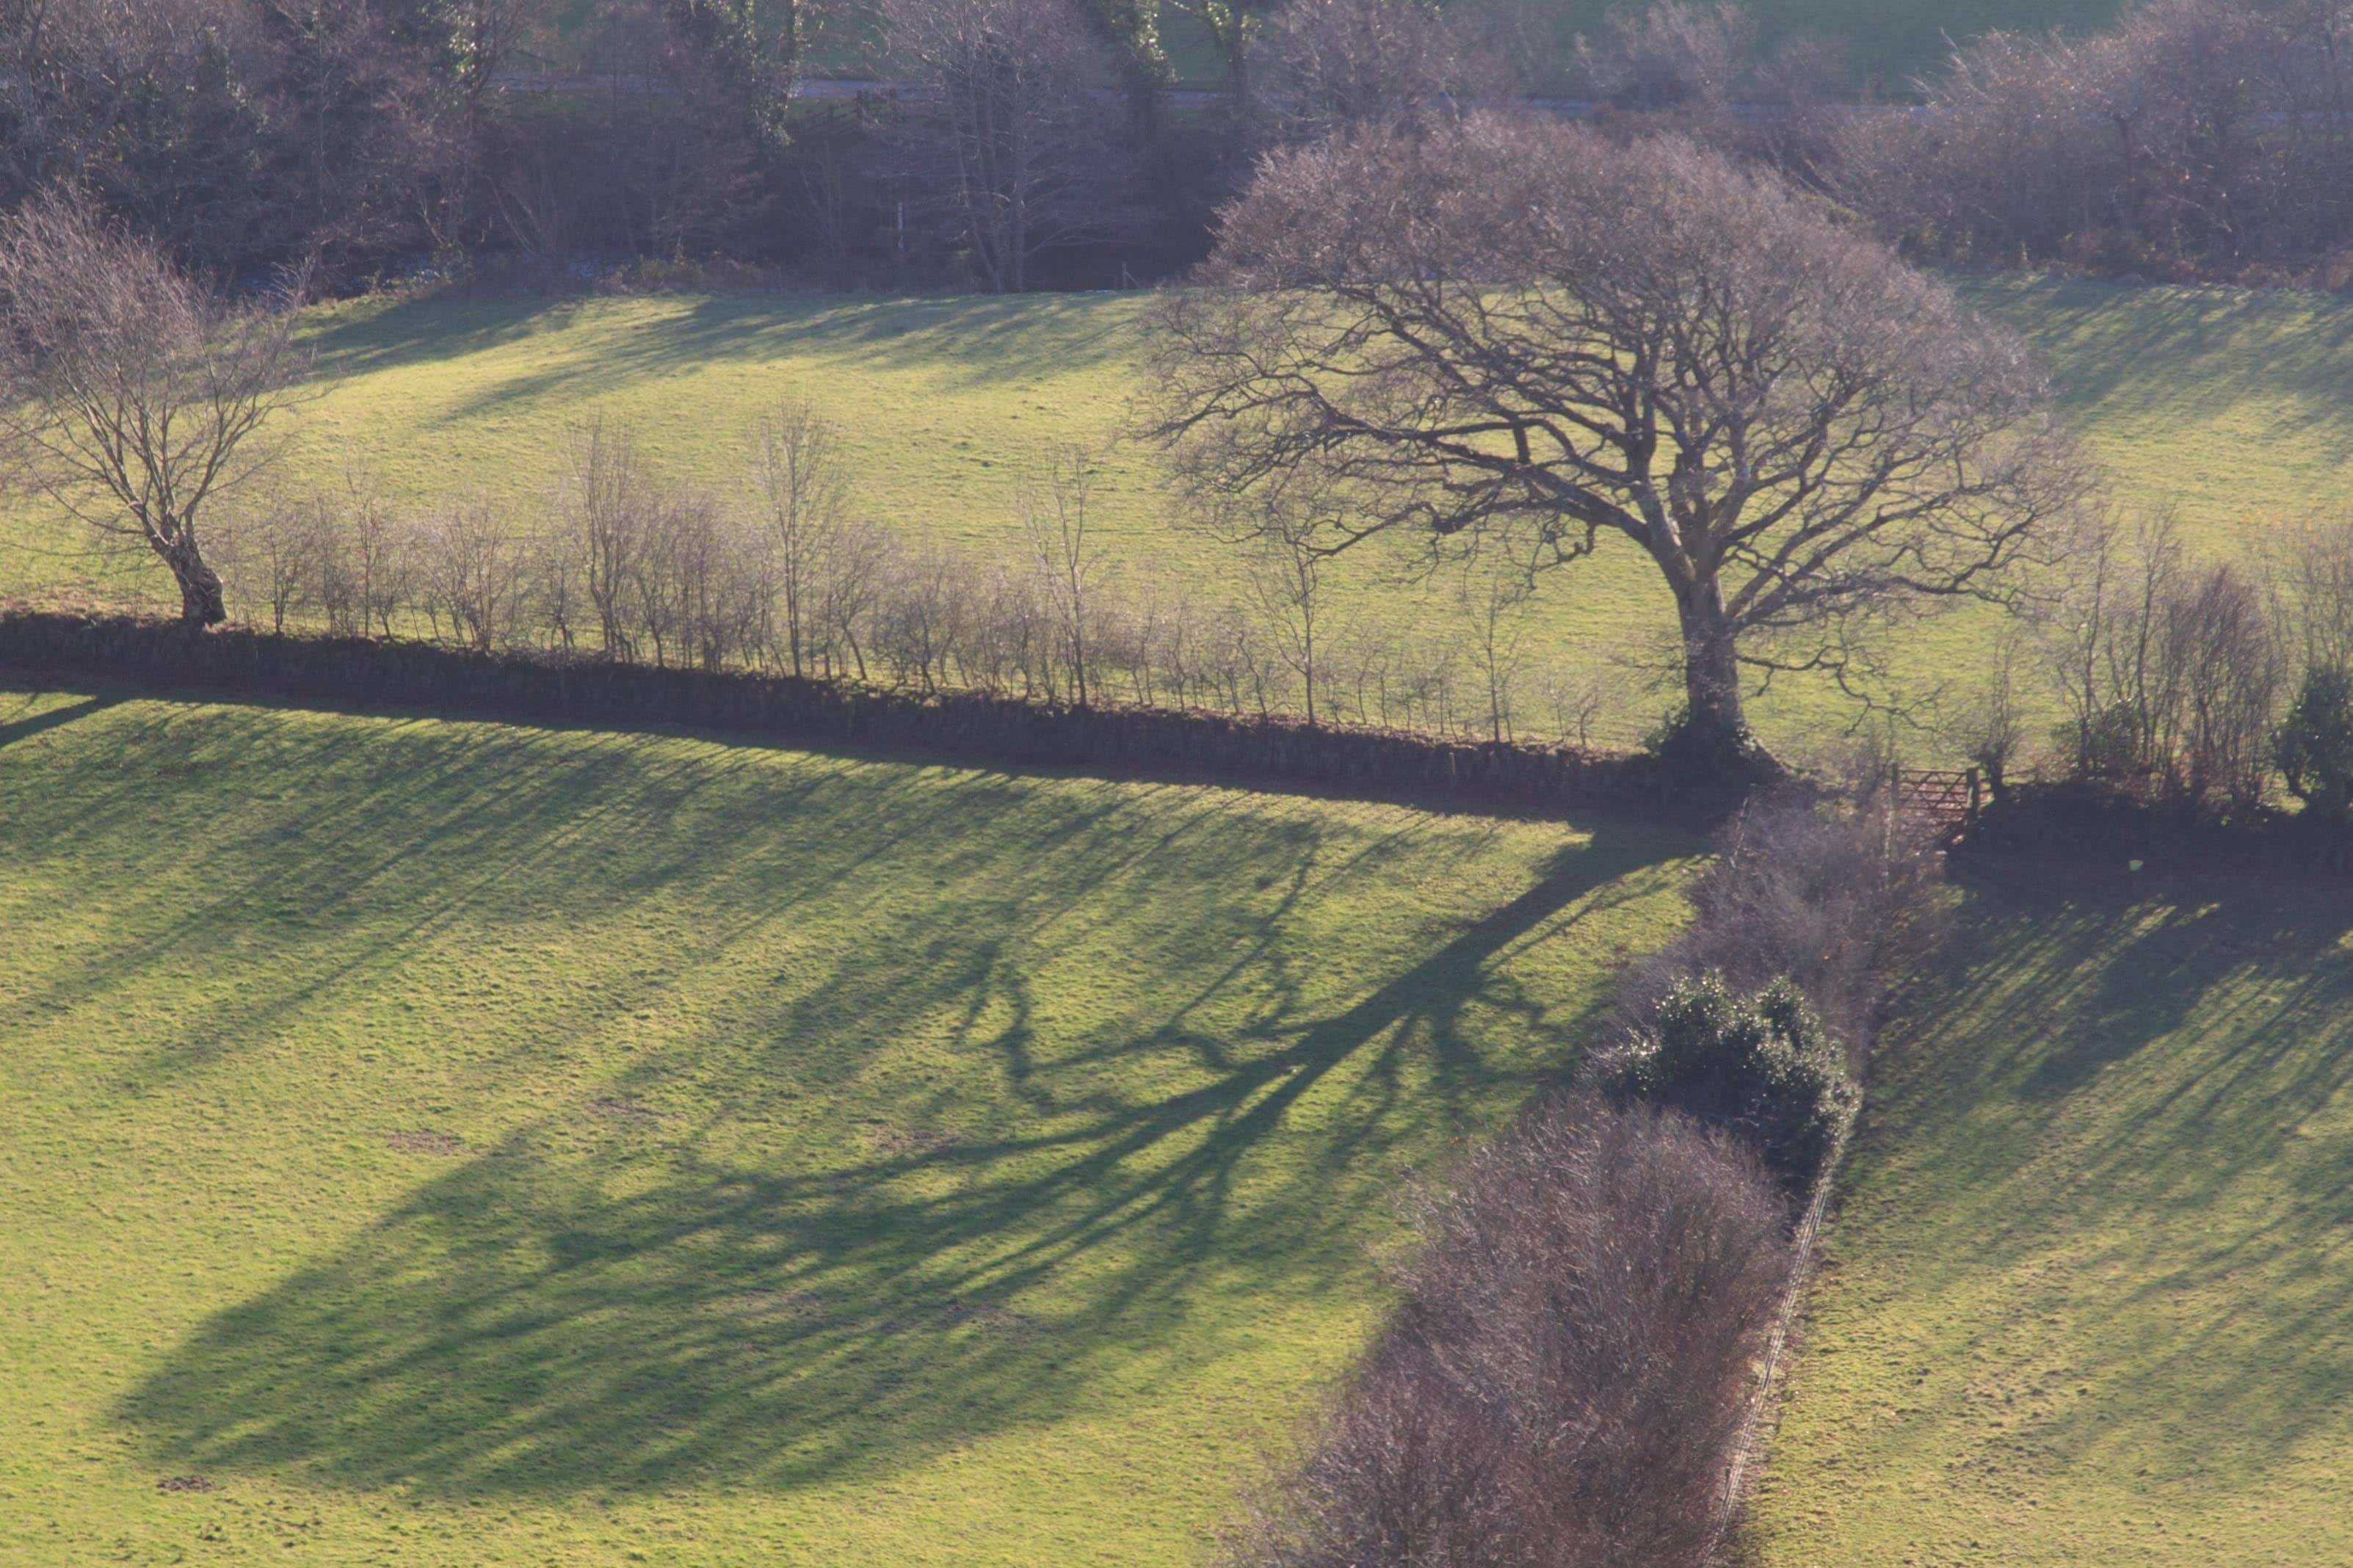 Trees and shadows  near Brendon, Exmoor. December 2014